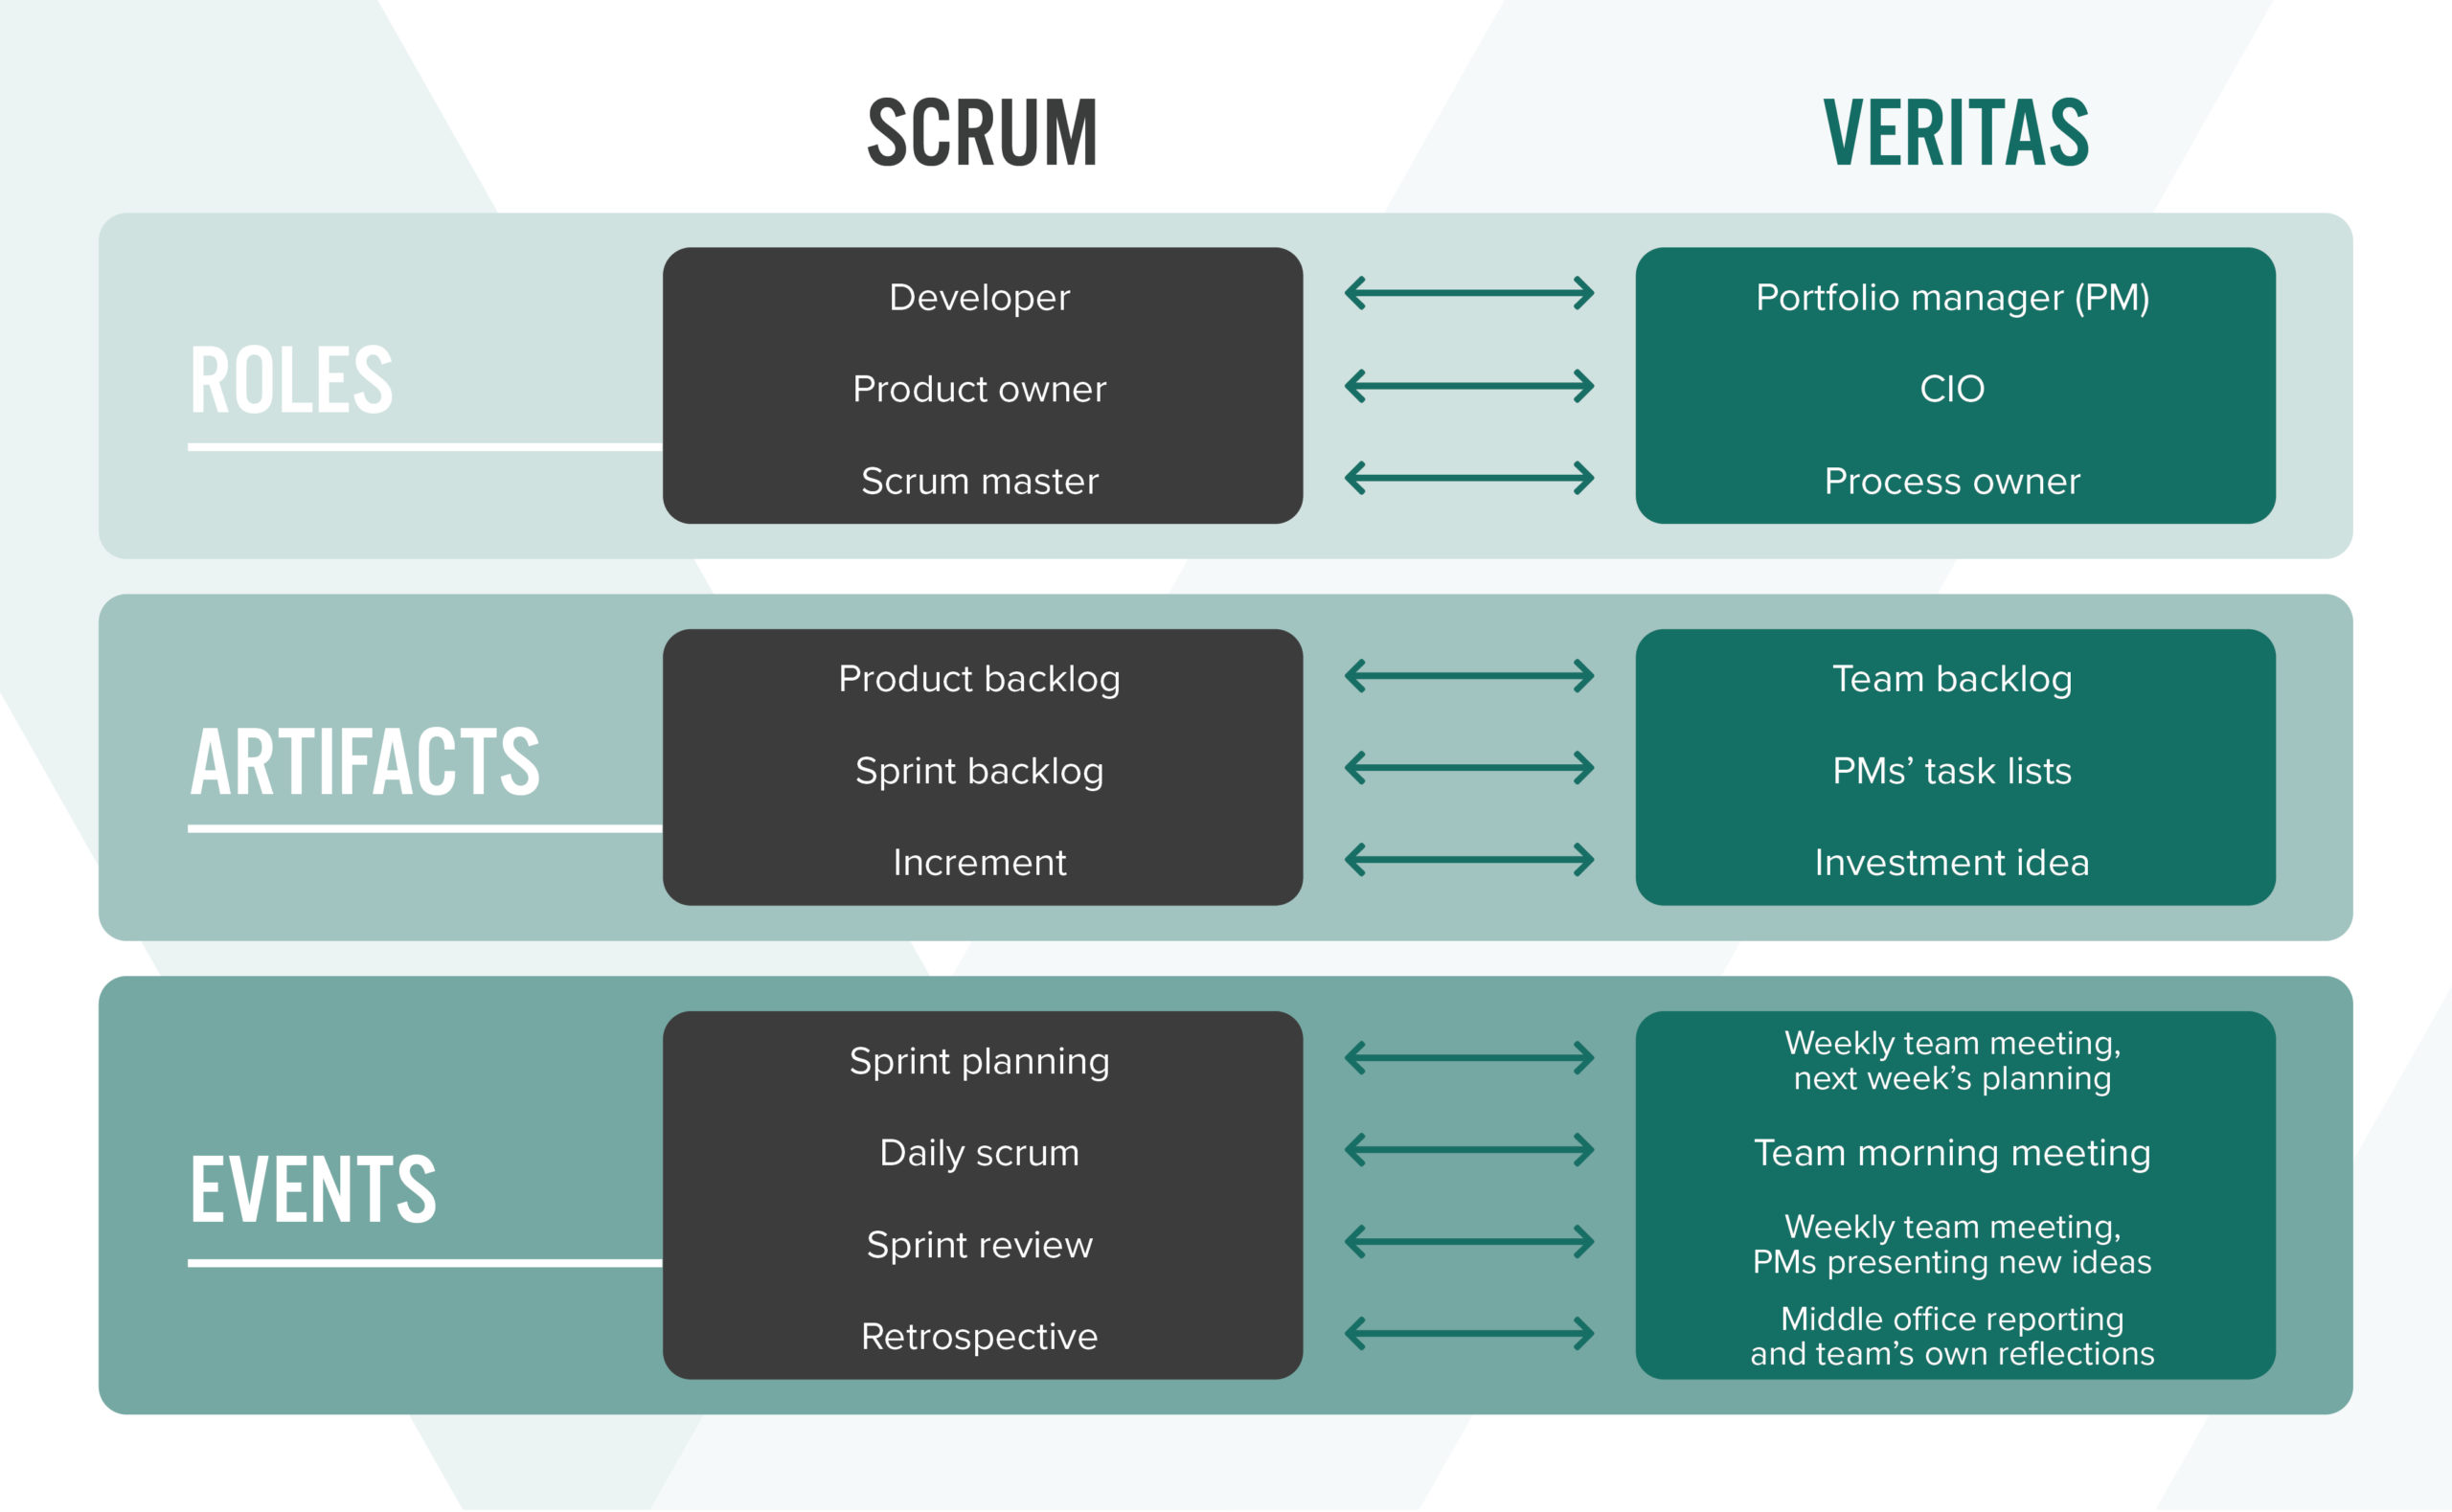 Scrum roles: Developer, Product owner and Scrum master. Roles at Veritas: Portfolio manager, CIO and Process owner.